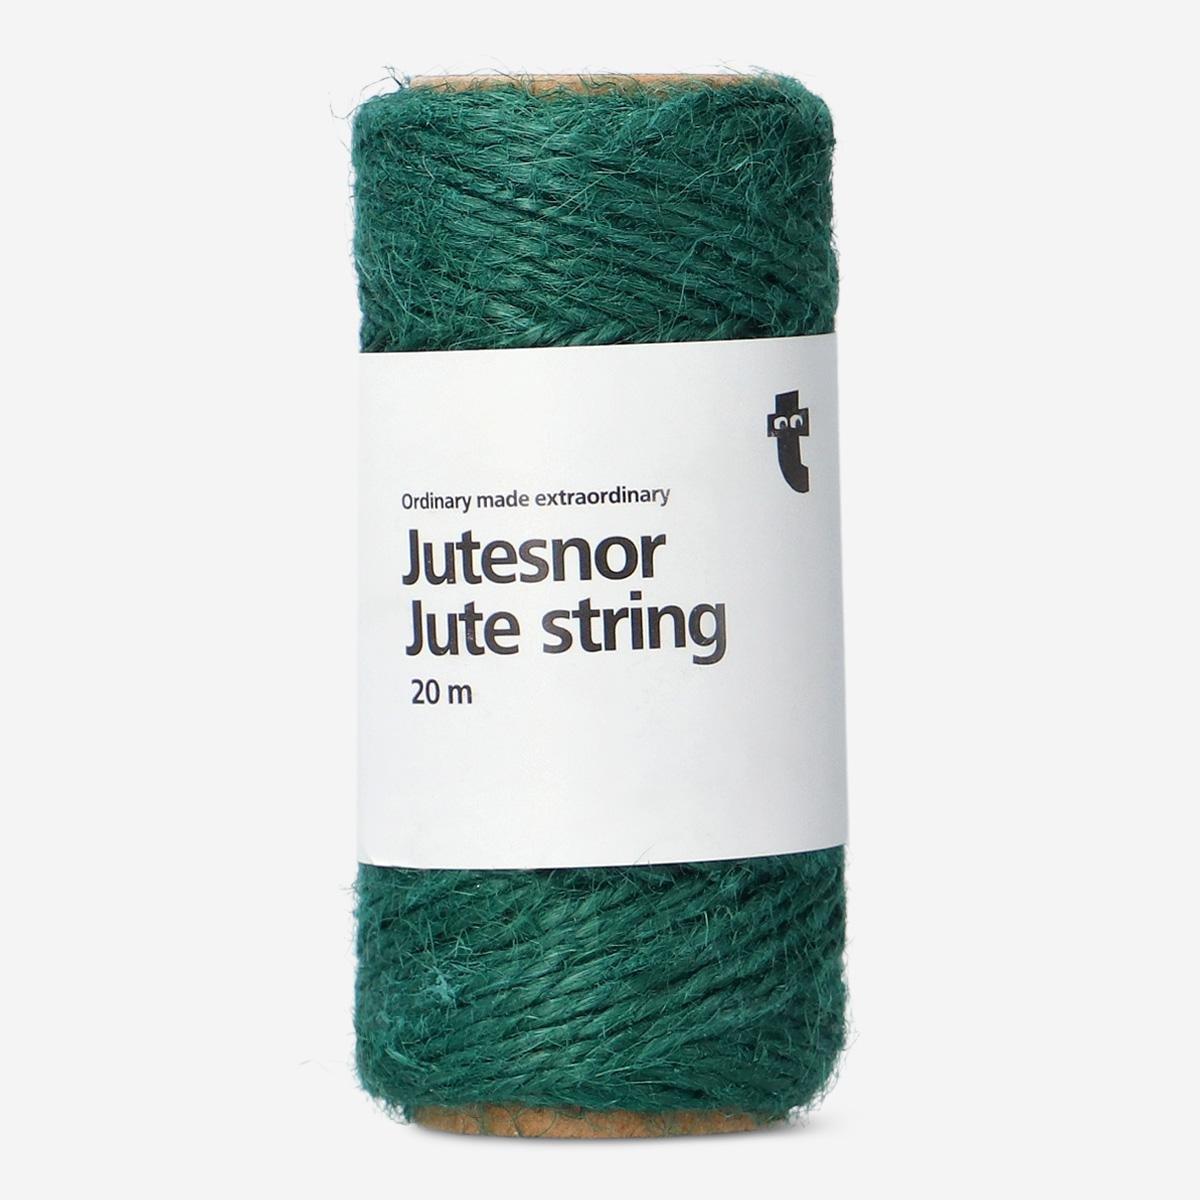 Green jute string